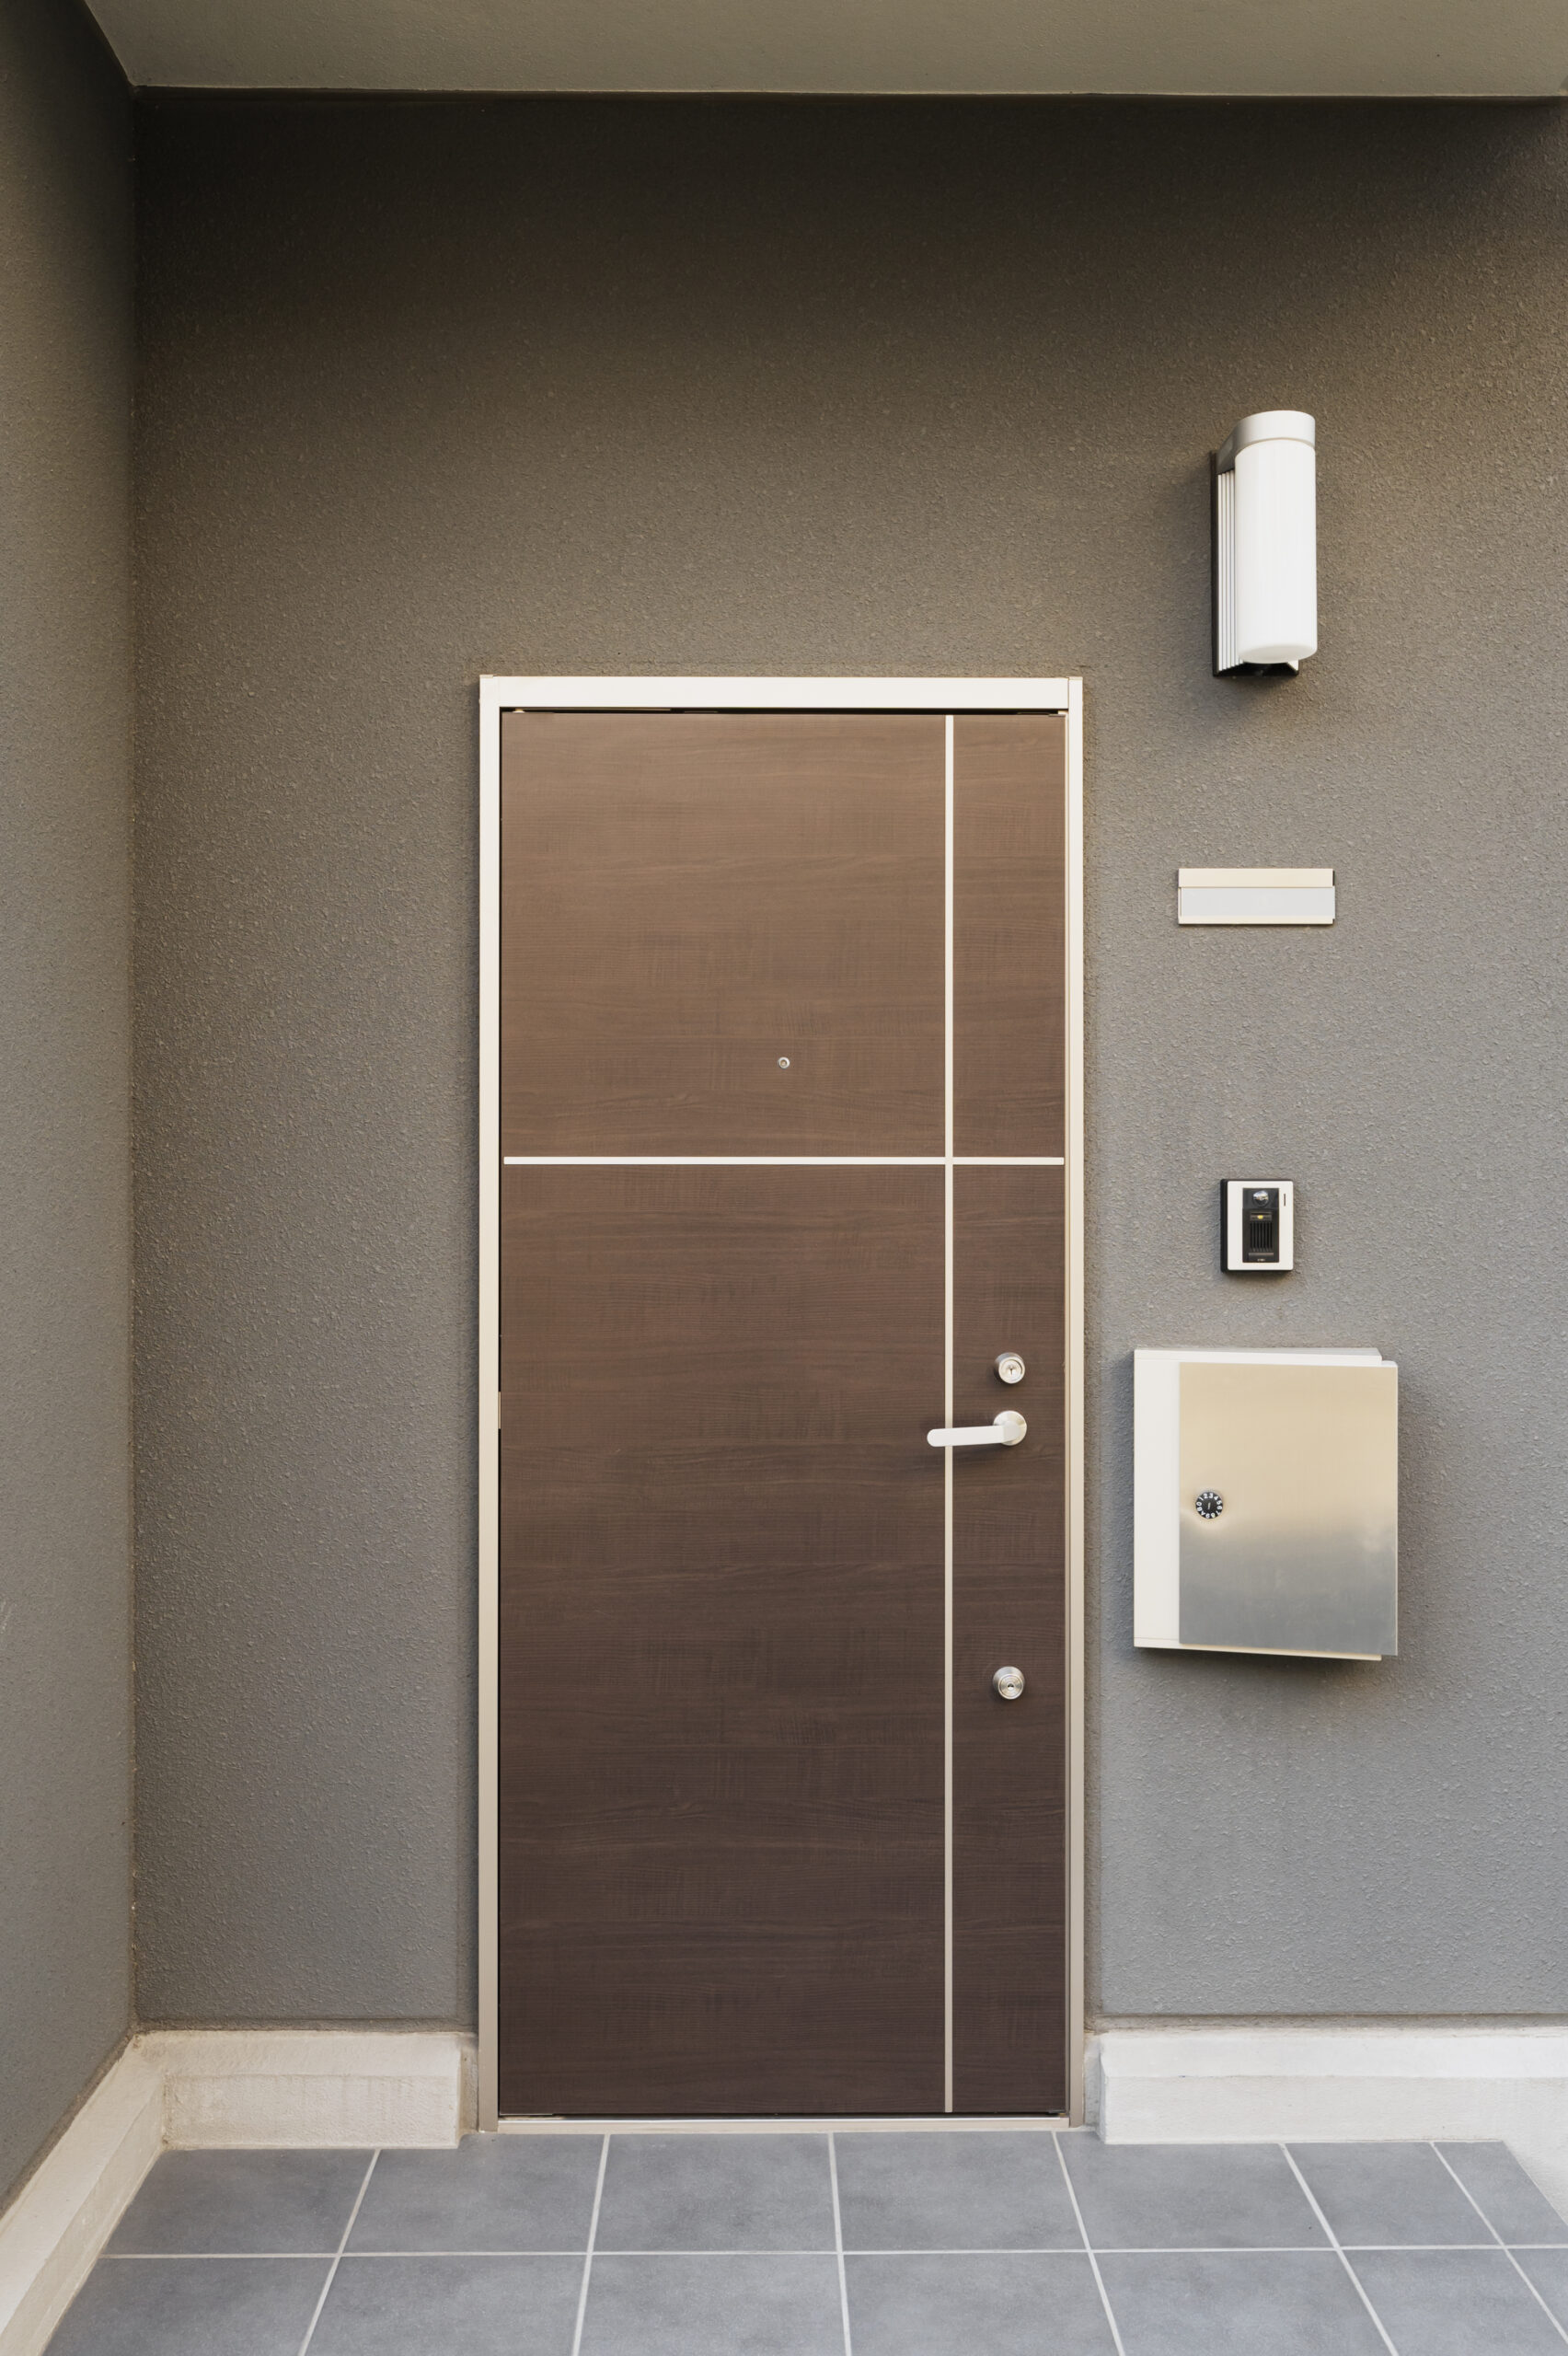 Sunmica Design for Doors: 5 Best Ideas